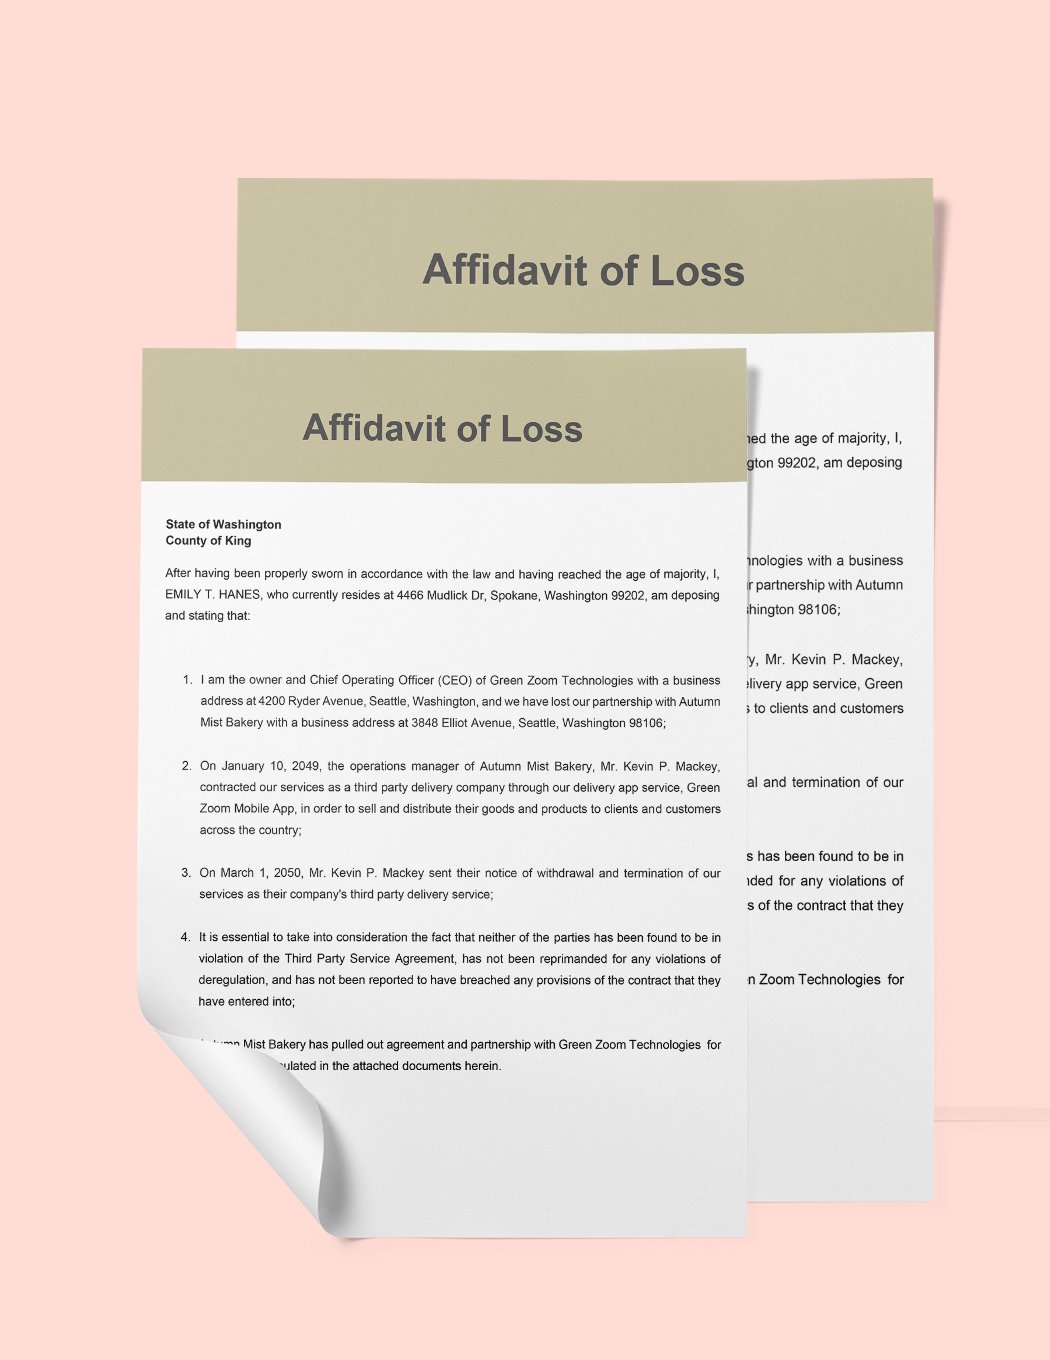 Third Party Loss Affidavit Template in Word, Google Docs, PDF